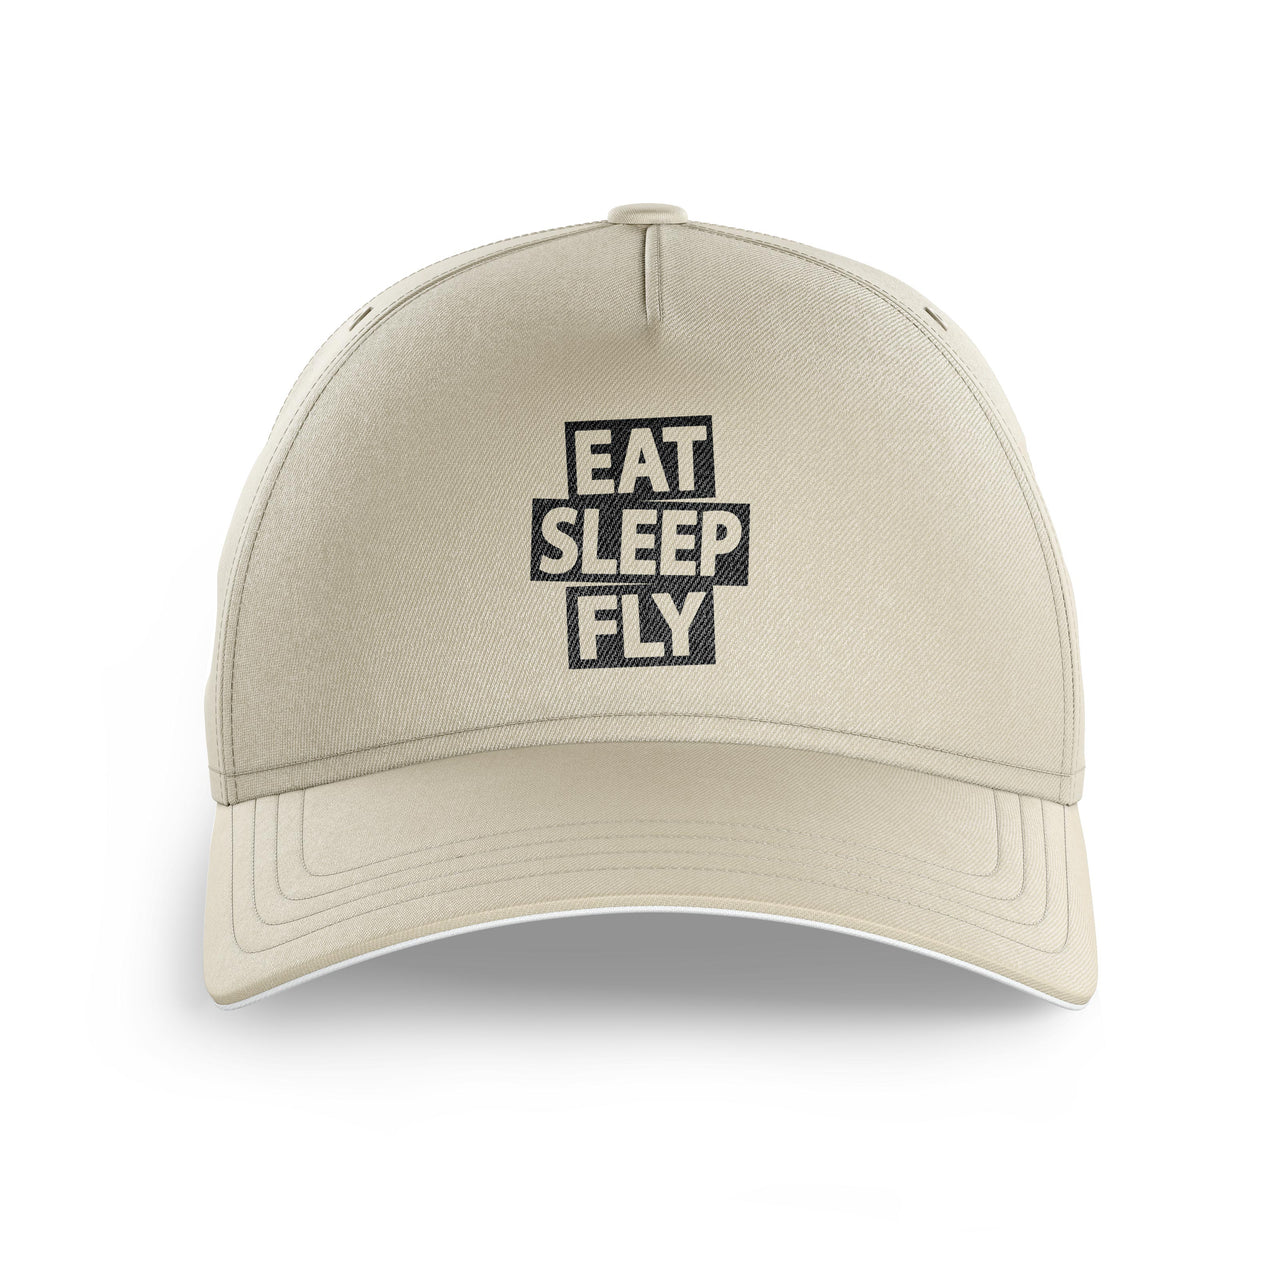 Eat Sleep Fly Printed Hats